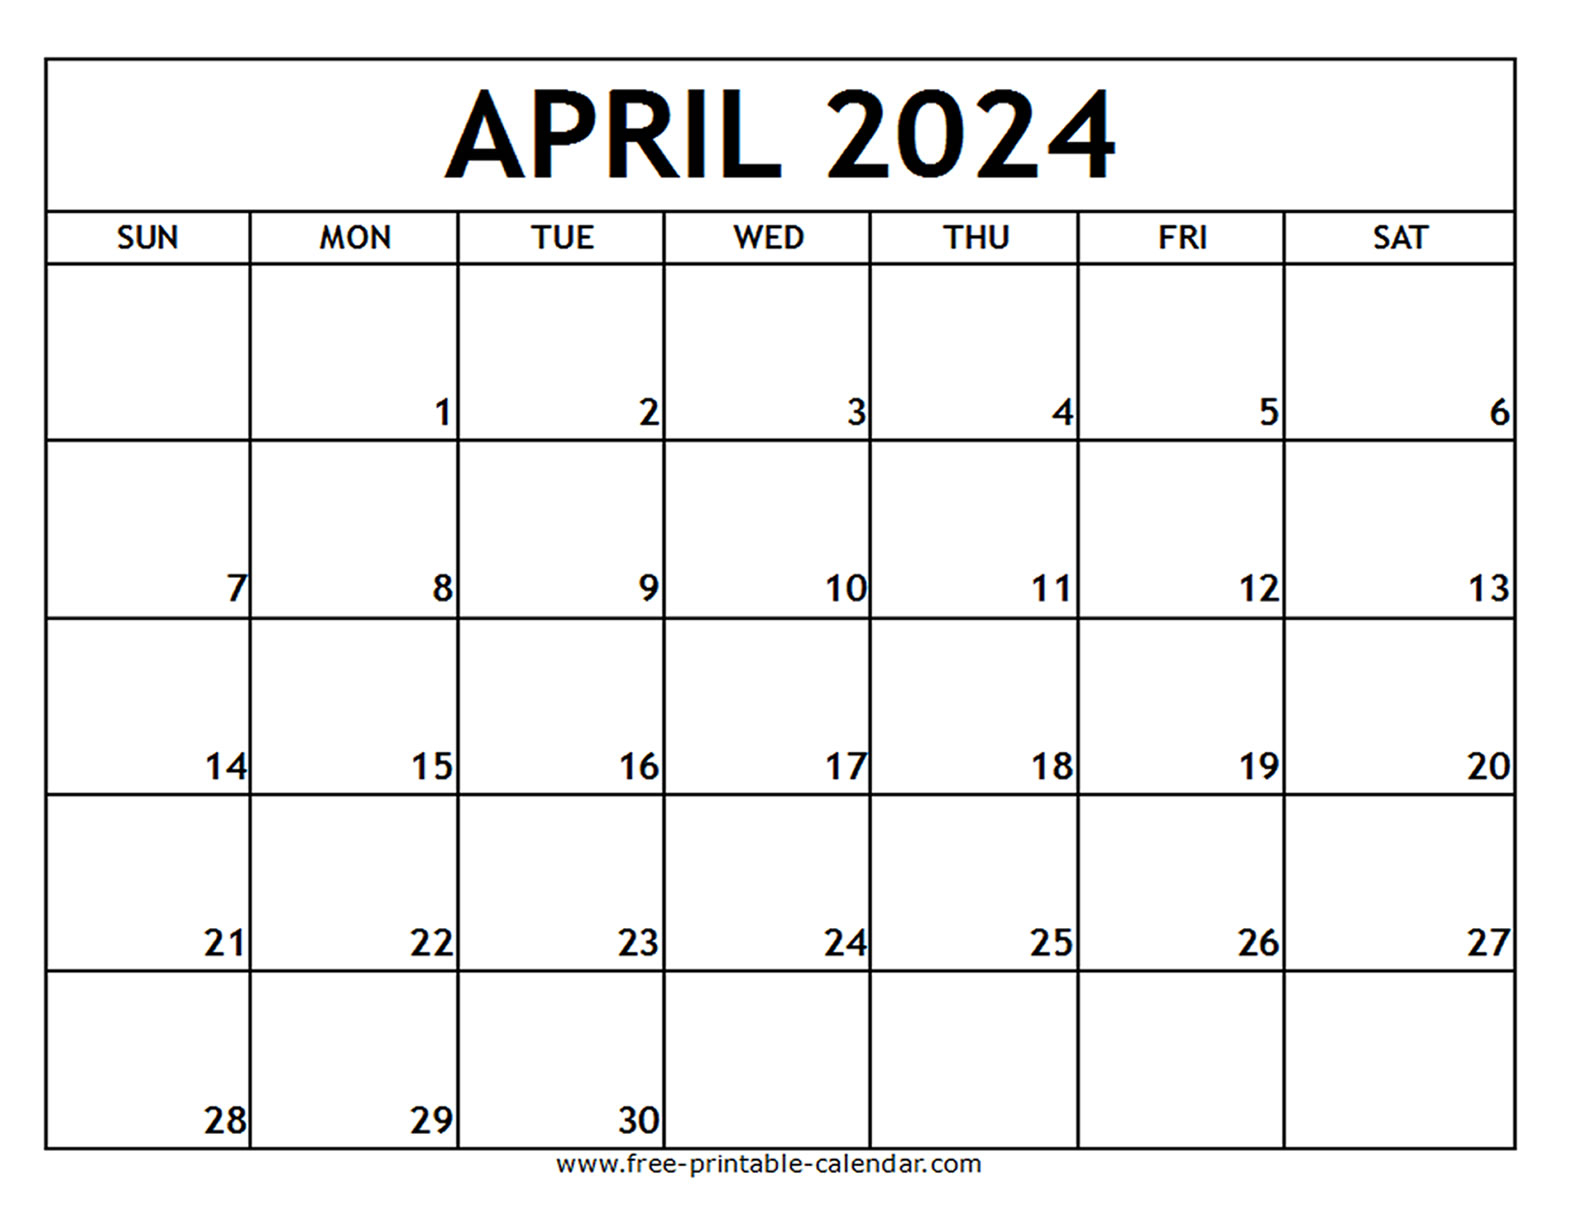 April 2024 Printable Calendar - Free-Printable-Calendar regarding April 2024 Blank Calendar